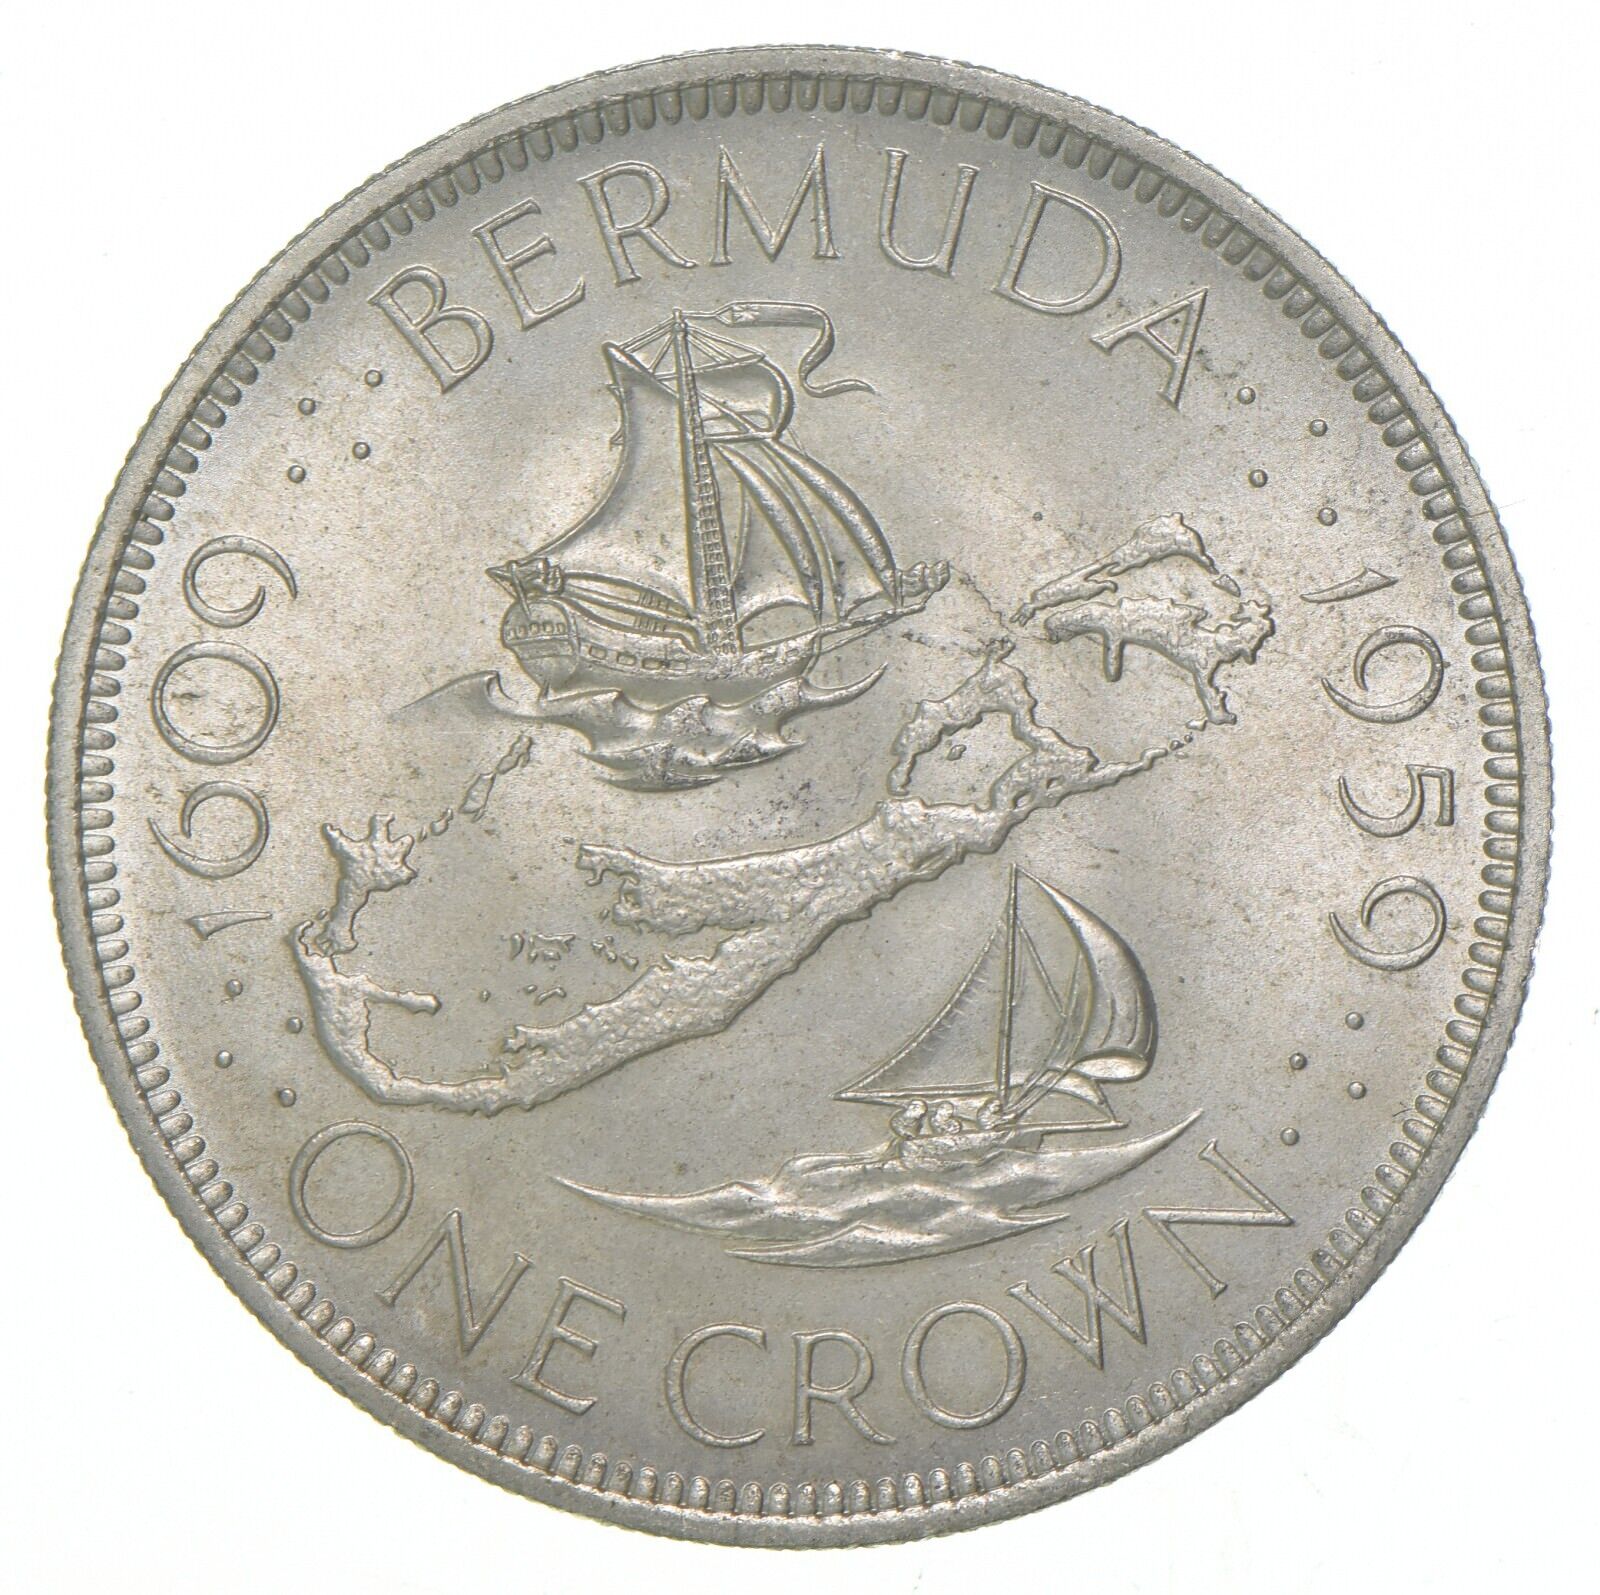 Silver - World Coin - 1959 Bermuda 1 Crown - World Silver Coin *328